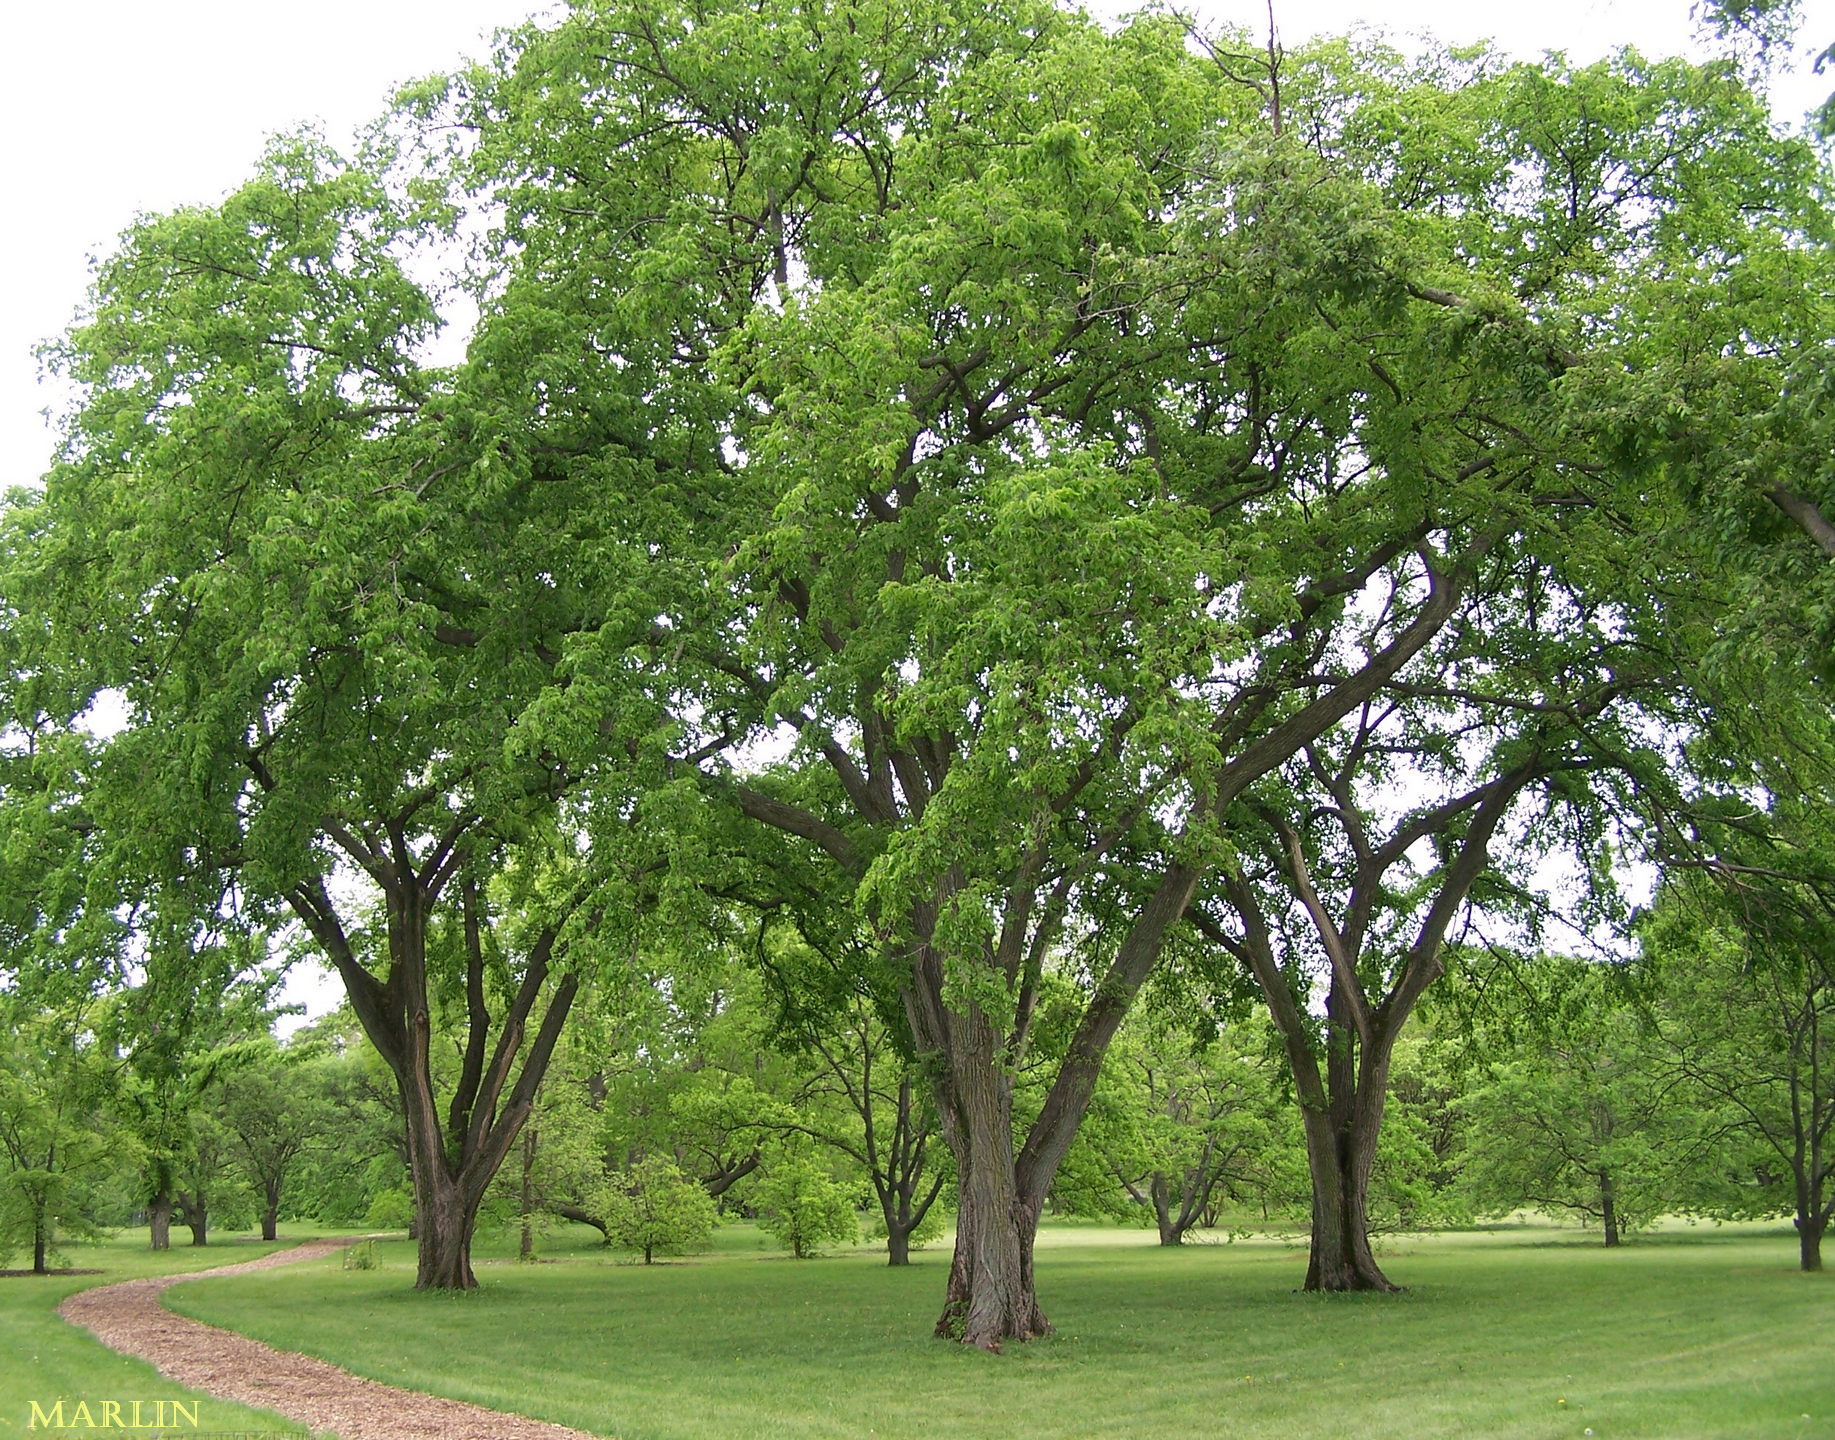 Three American elm trees